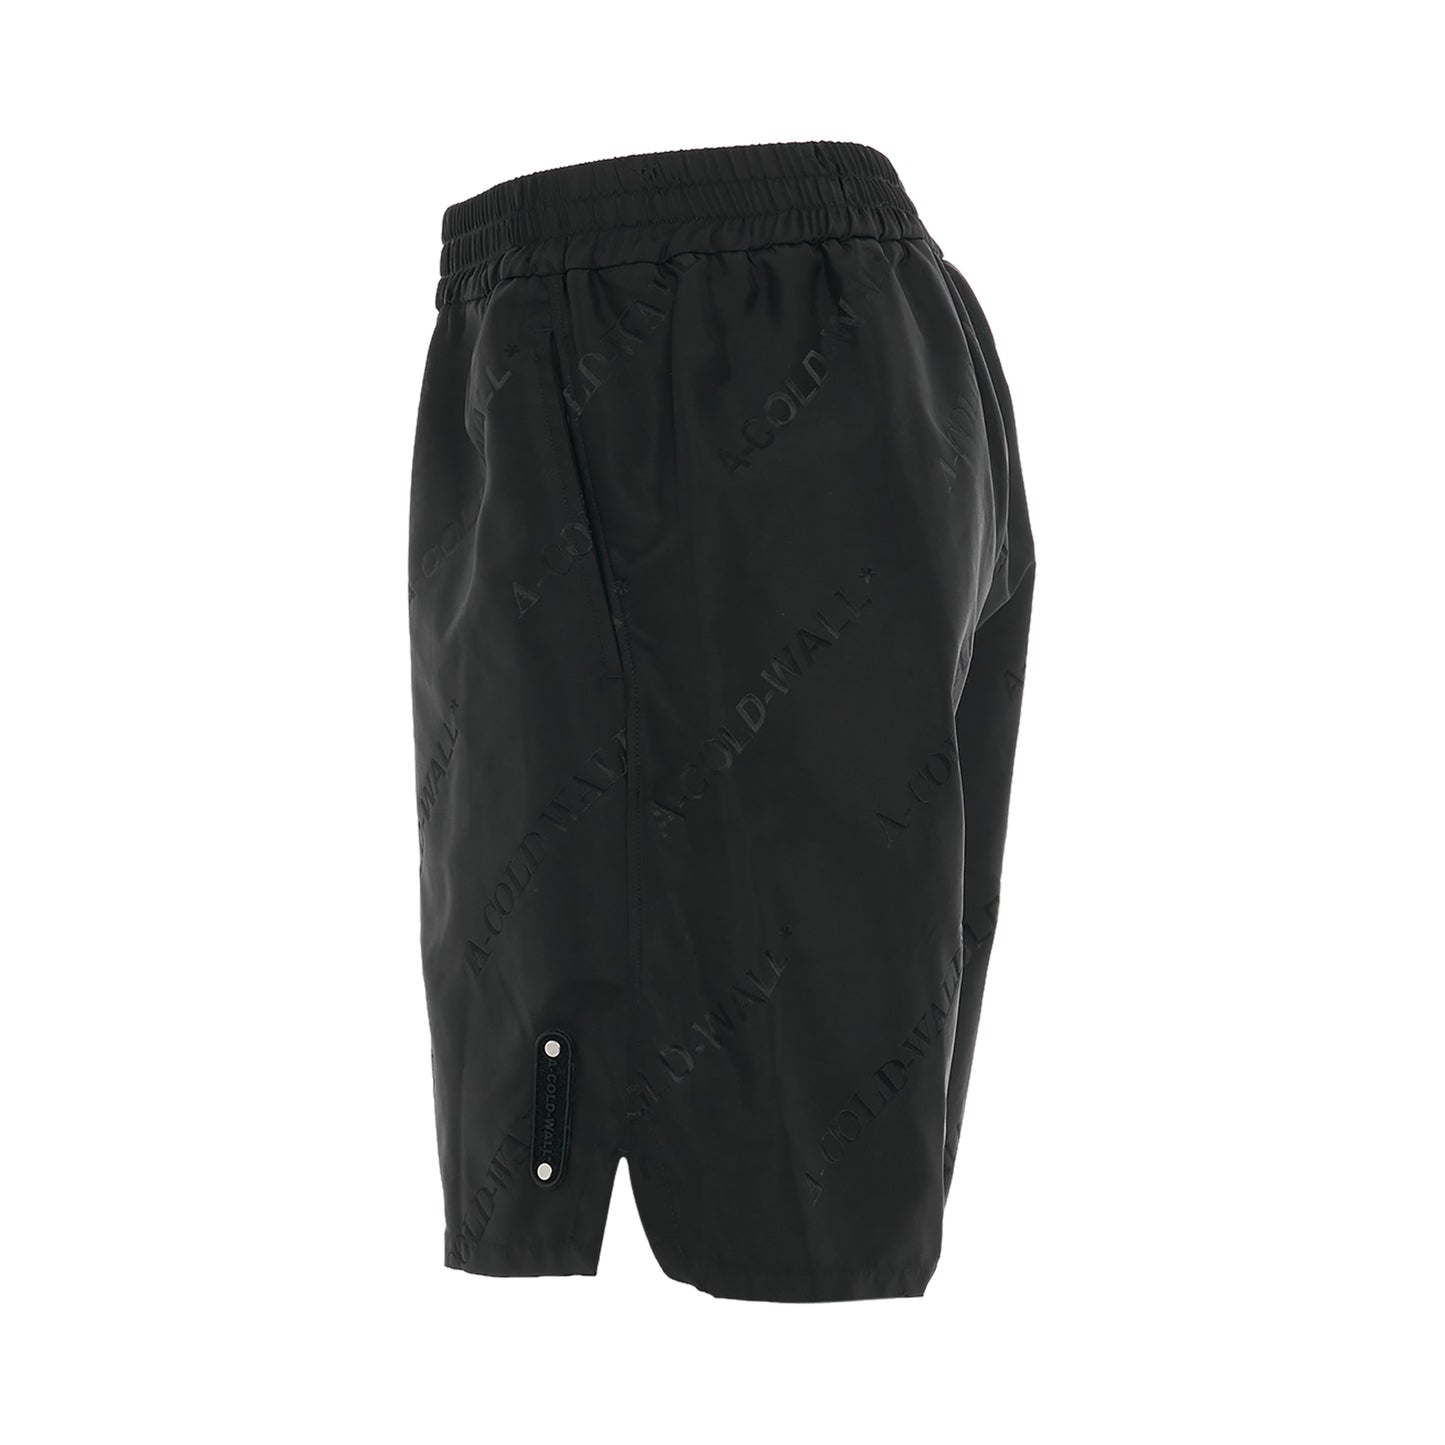 Monogram Shorts in Black